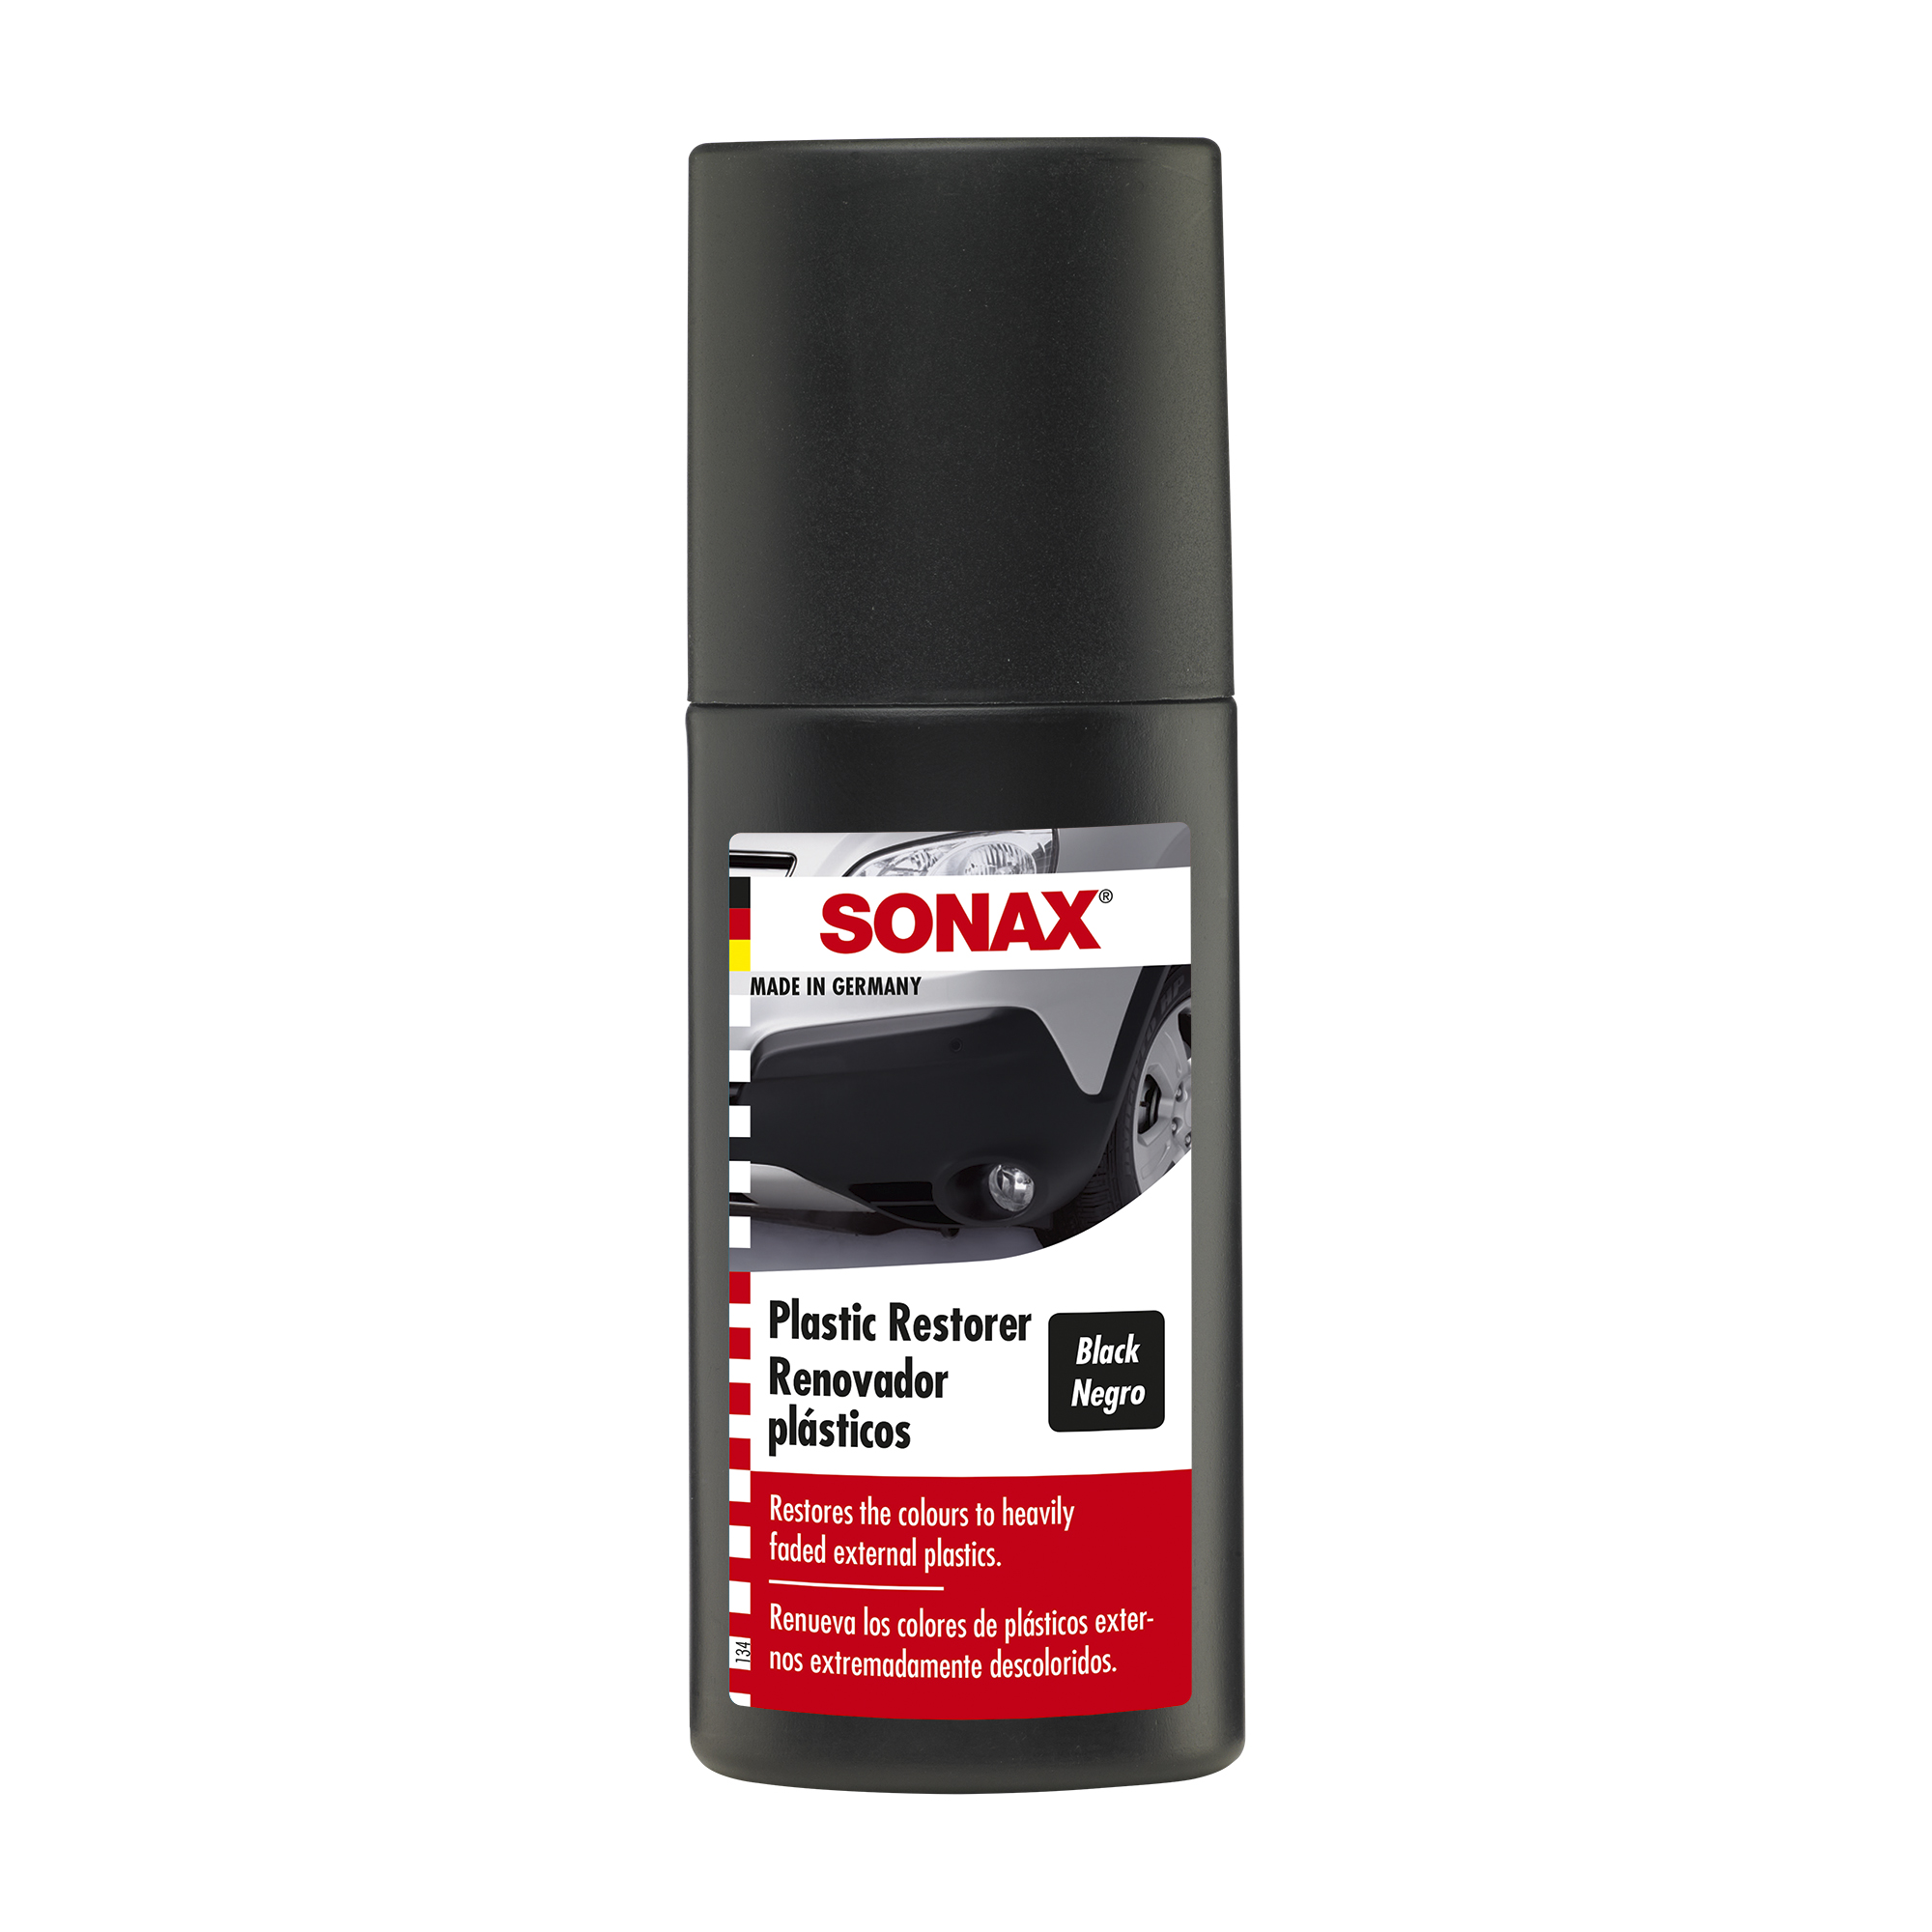 Sonax Black Plastic Restorer